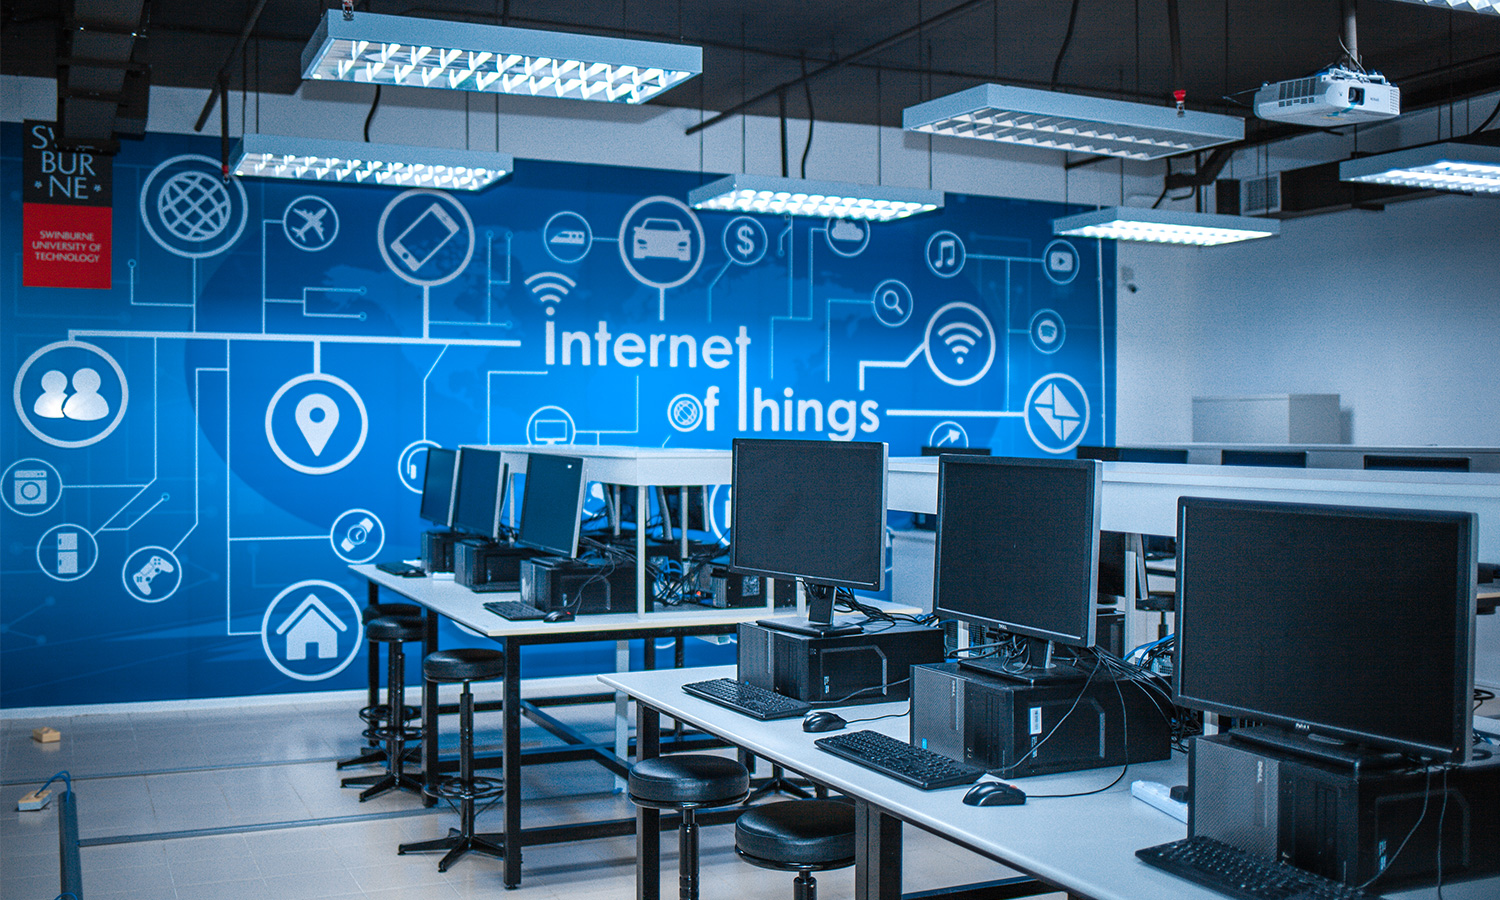 Internet of Things (IoT) laboratory